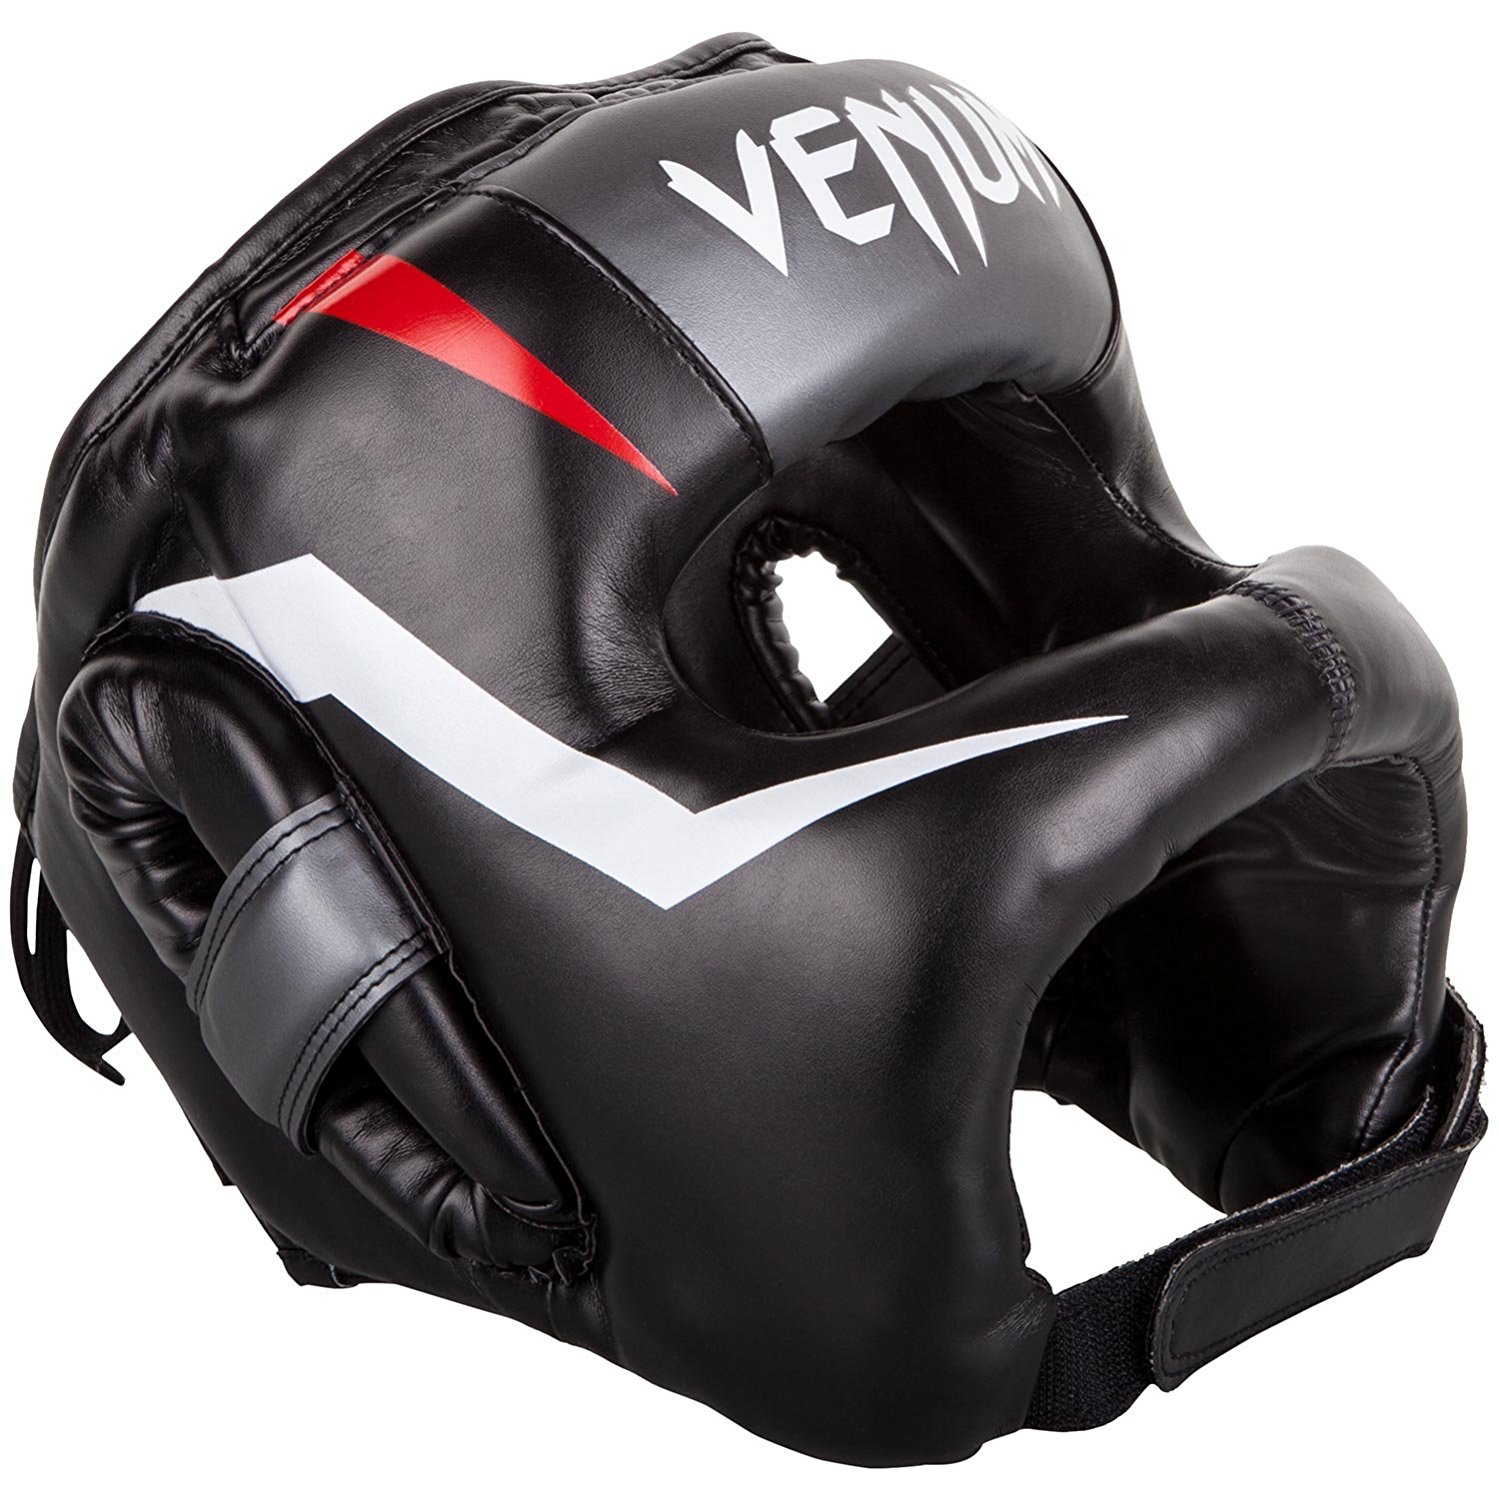  Venum Elite Iron Headgear